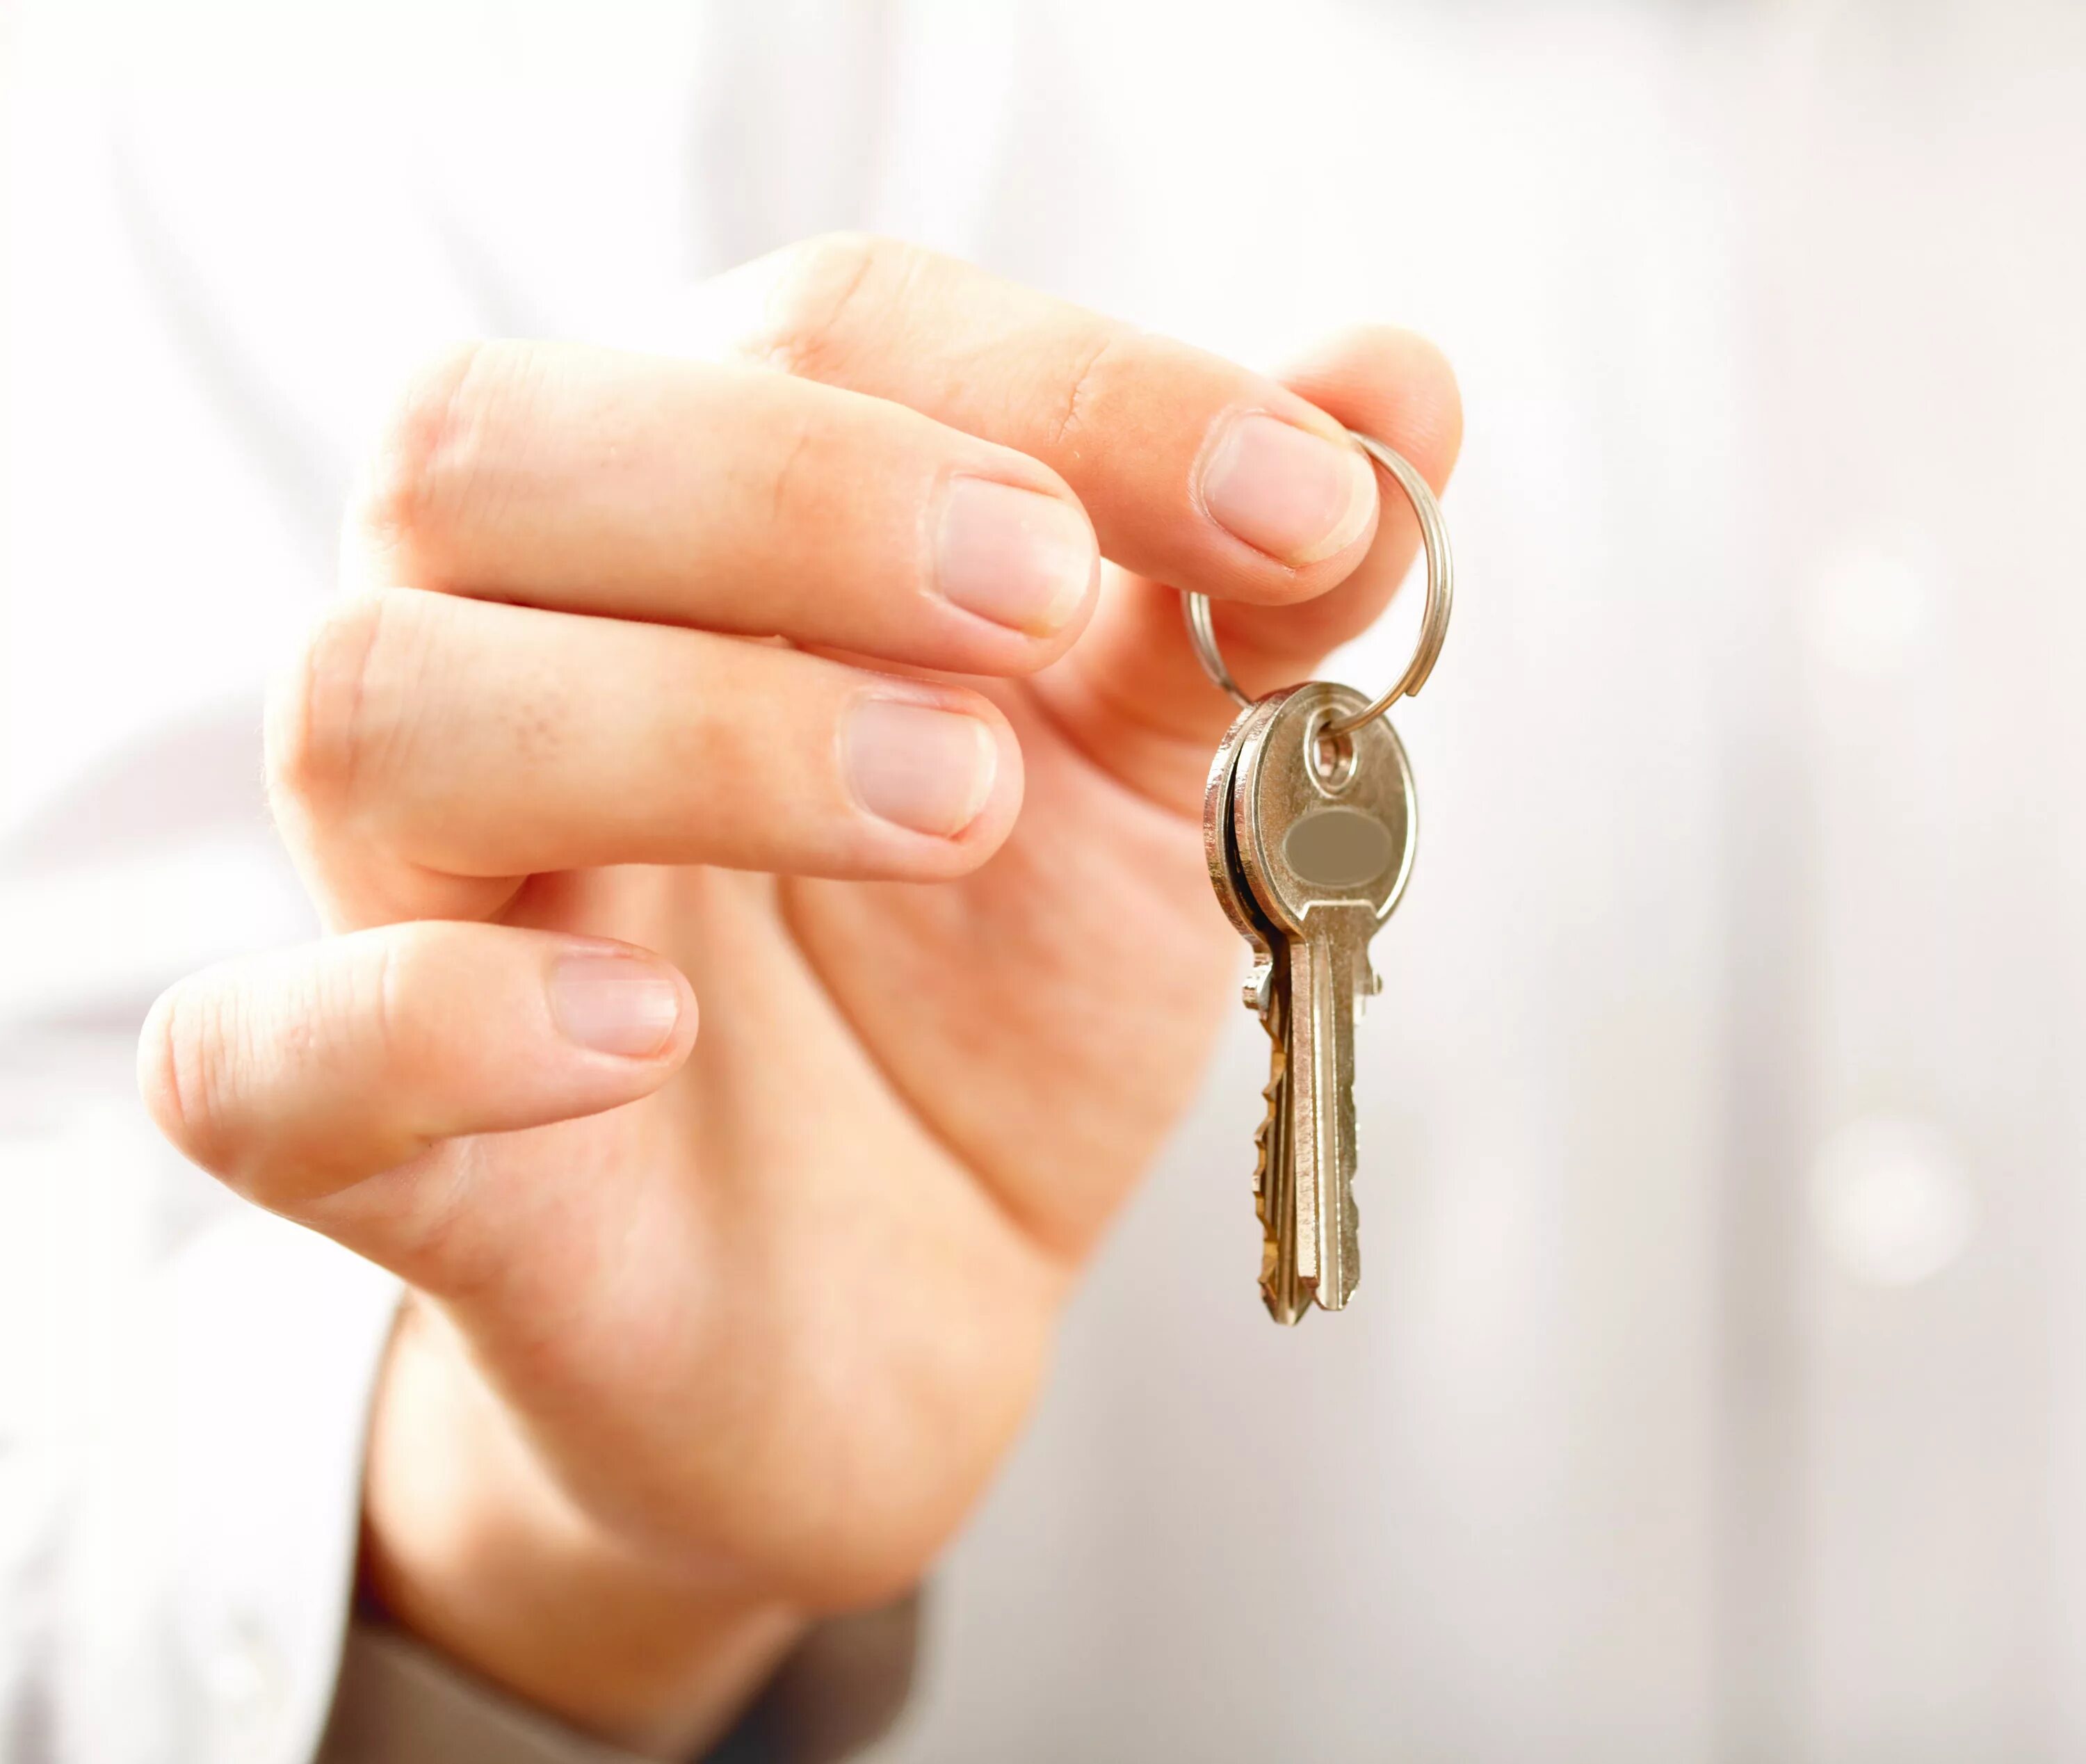 Сонник ключи от квартиры. Ключ в руке. Ключи от квартиры. Ключ рука квартира. Ключи от квартиры в руке.